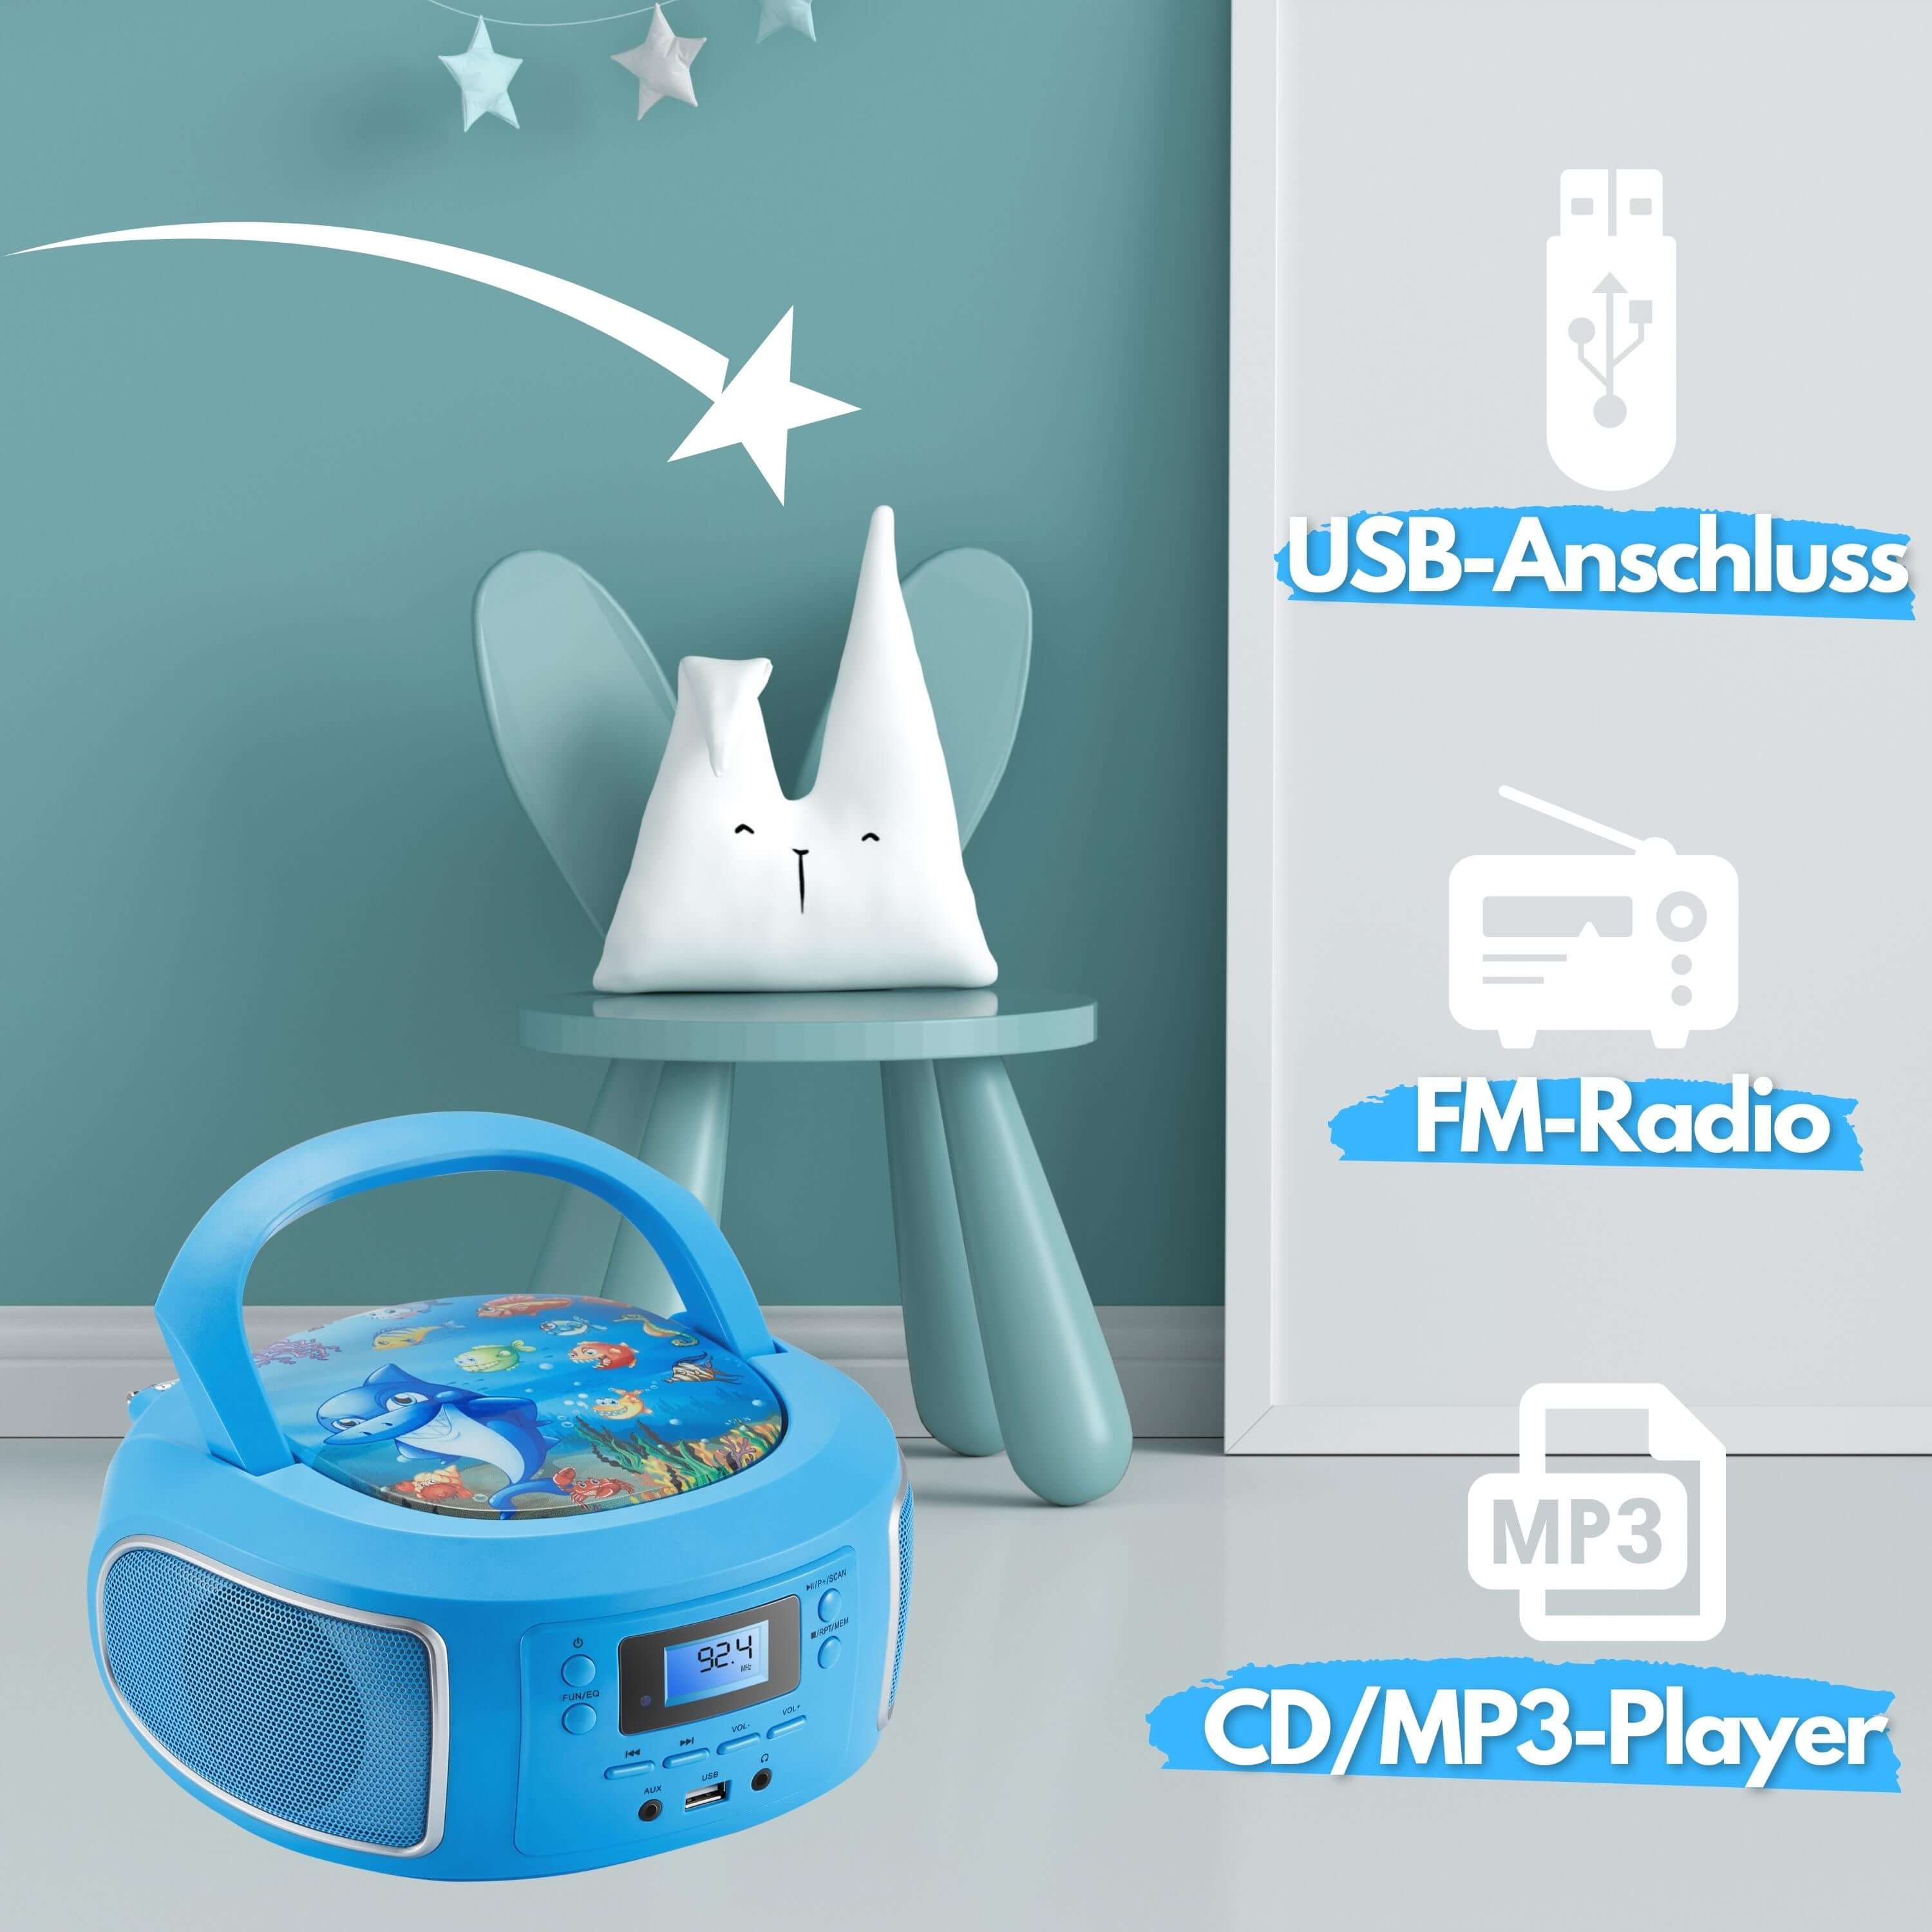 CL-930 Blau CD-Player CYBERLUX Portabler